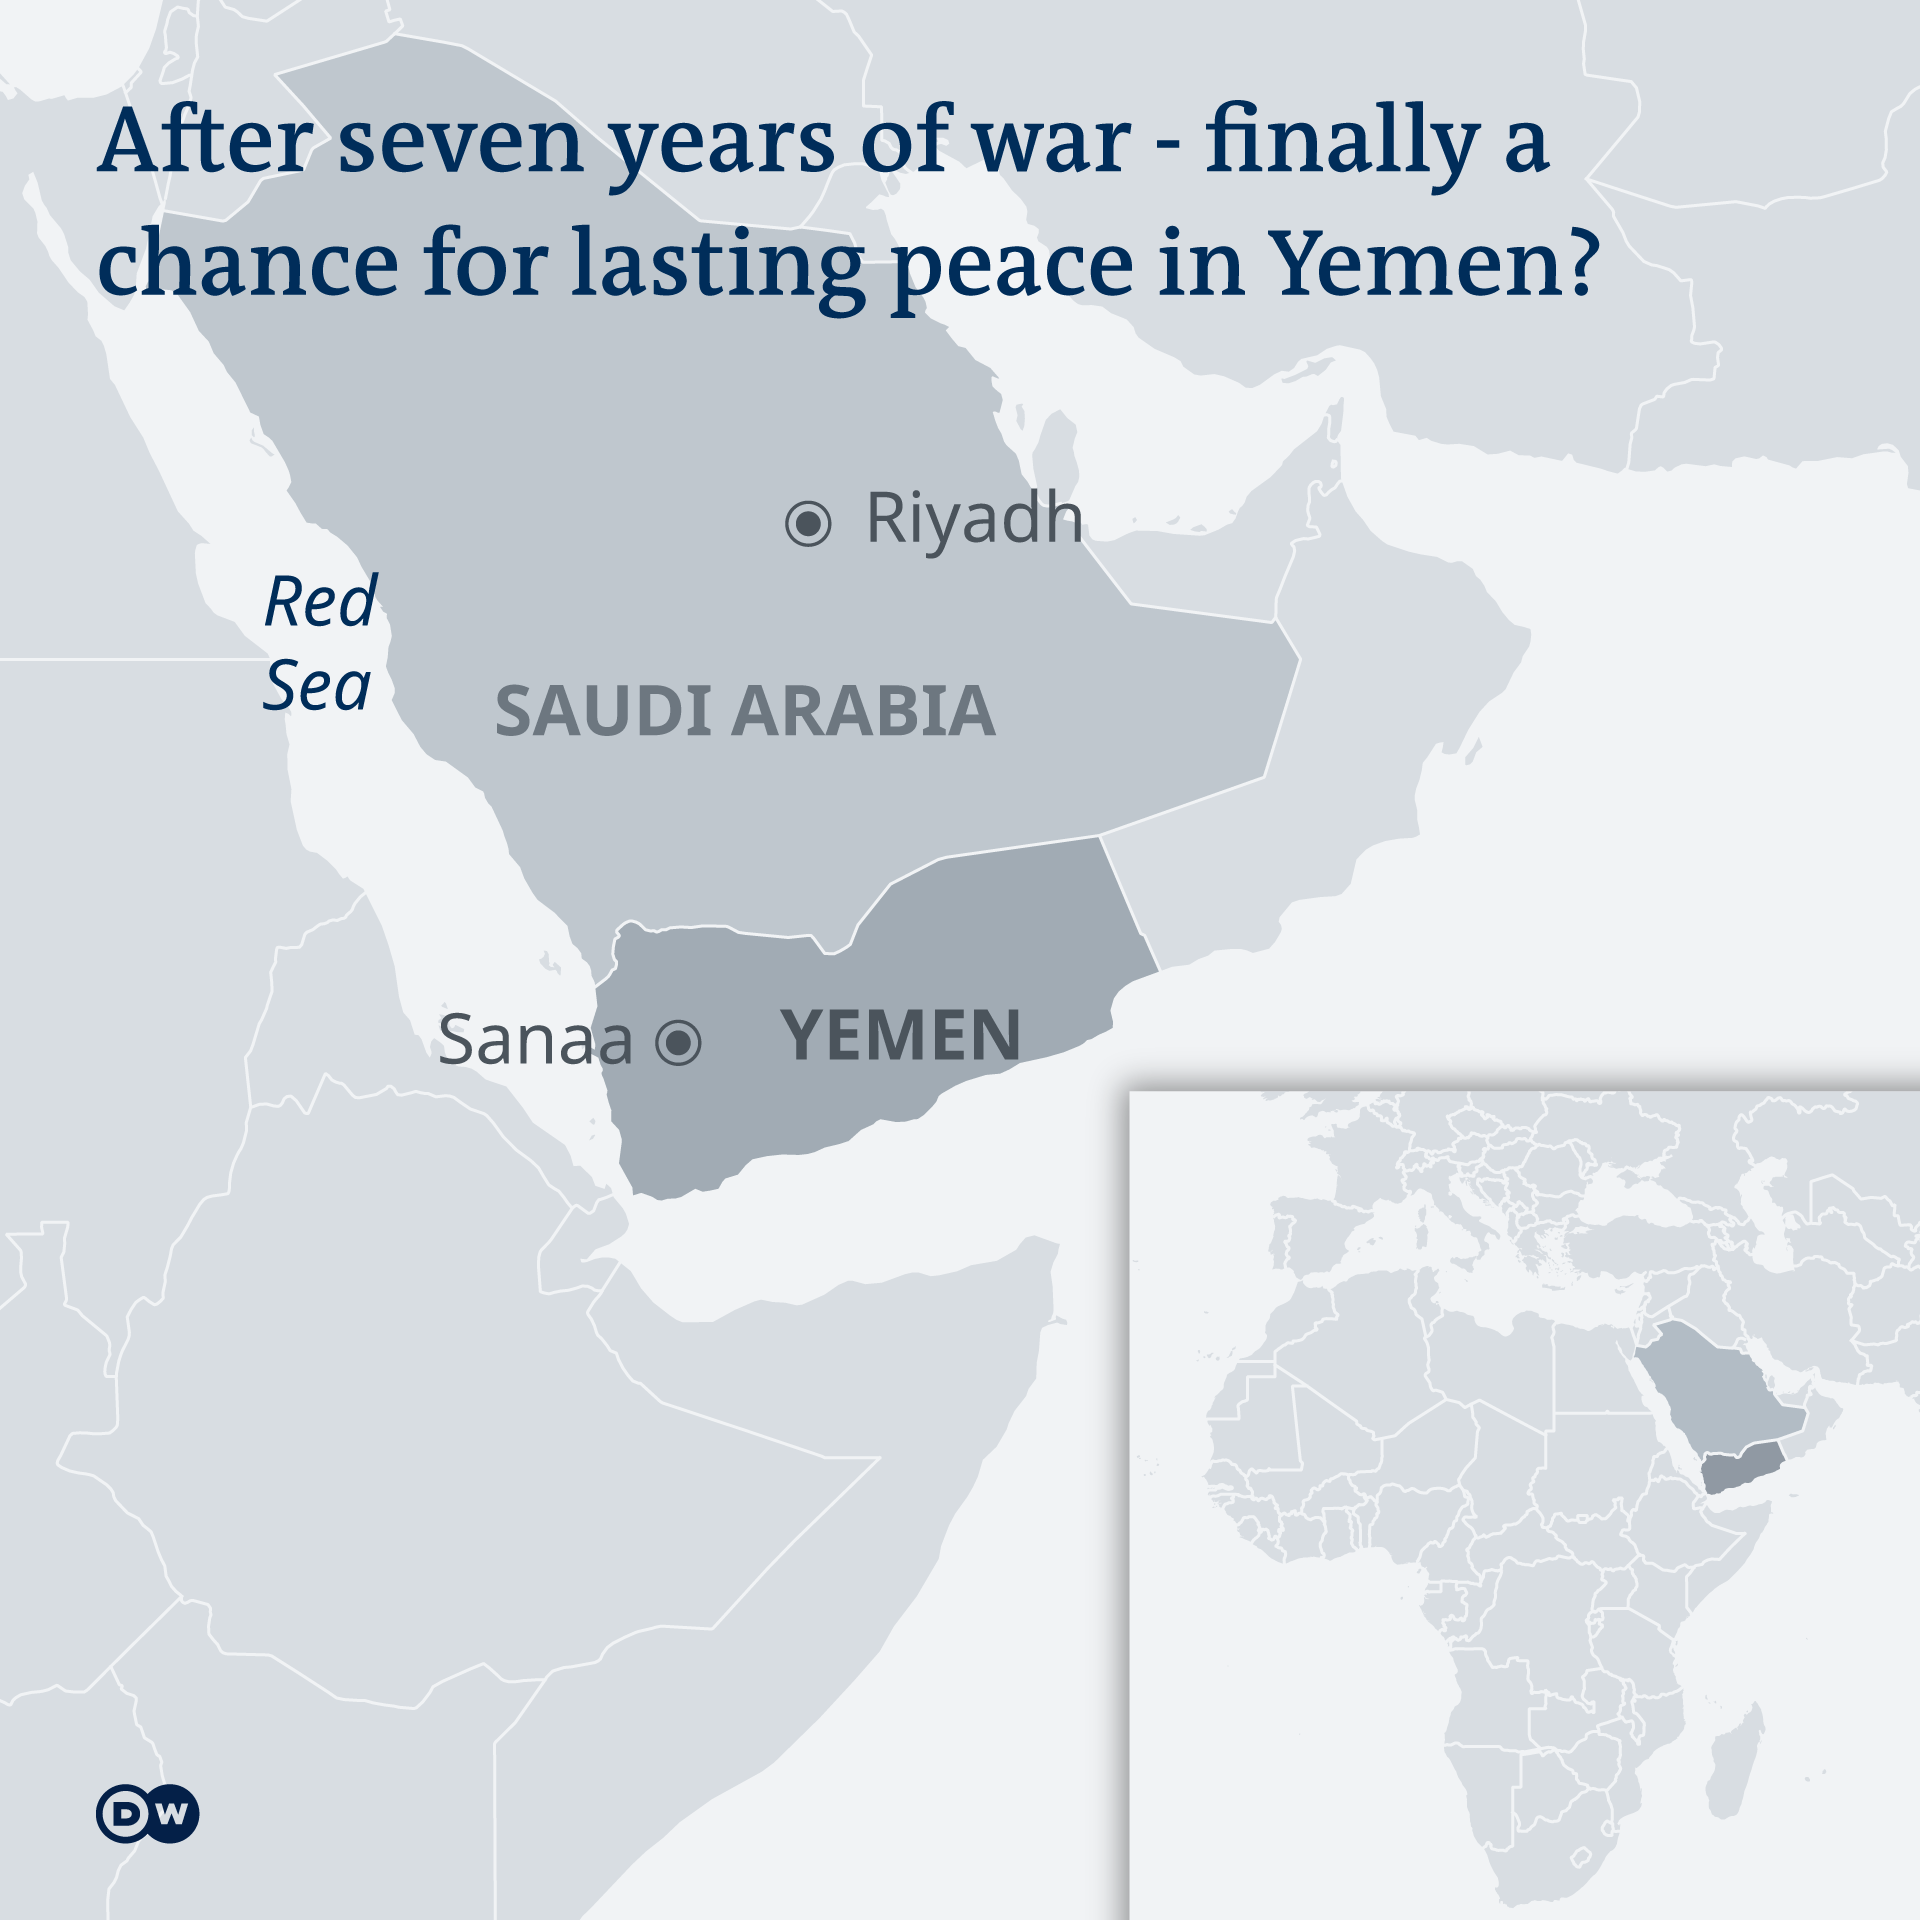 map of Yemen and Saudi Arabia 